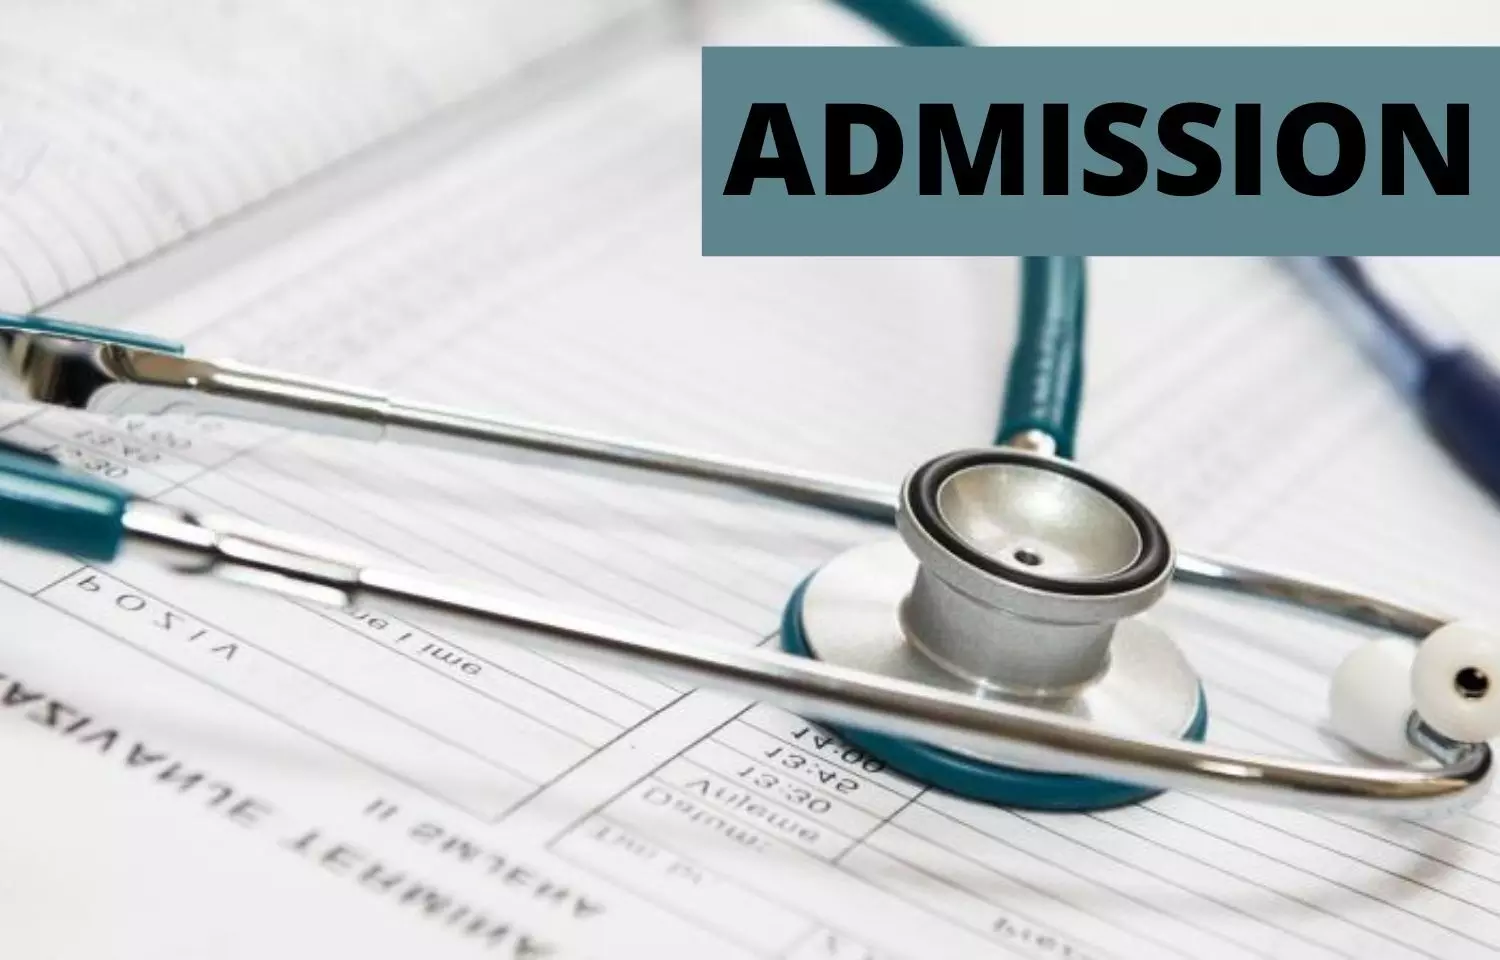 MSc Nursing Admissions 2021: KNRUHS issues notice verification of Original Certificates, Details